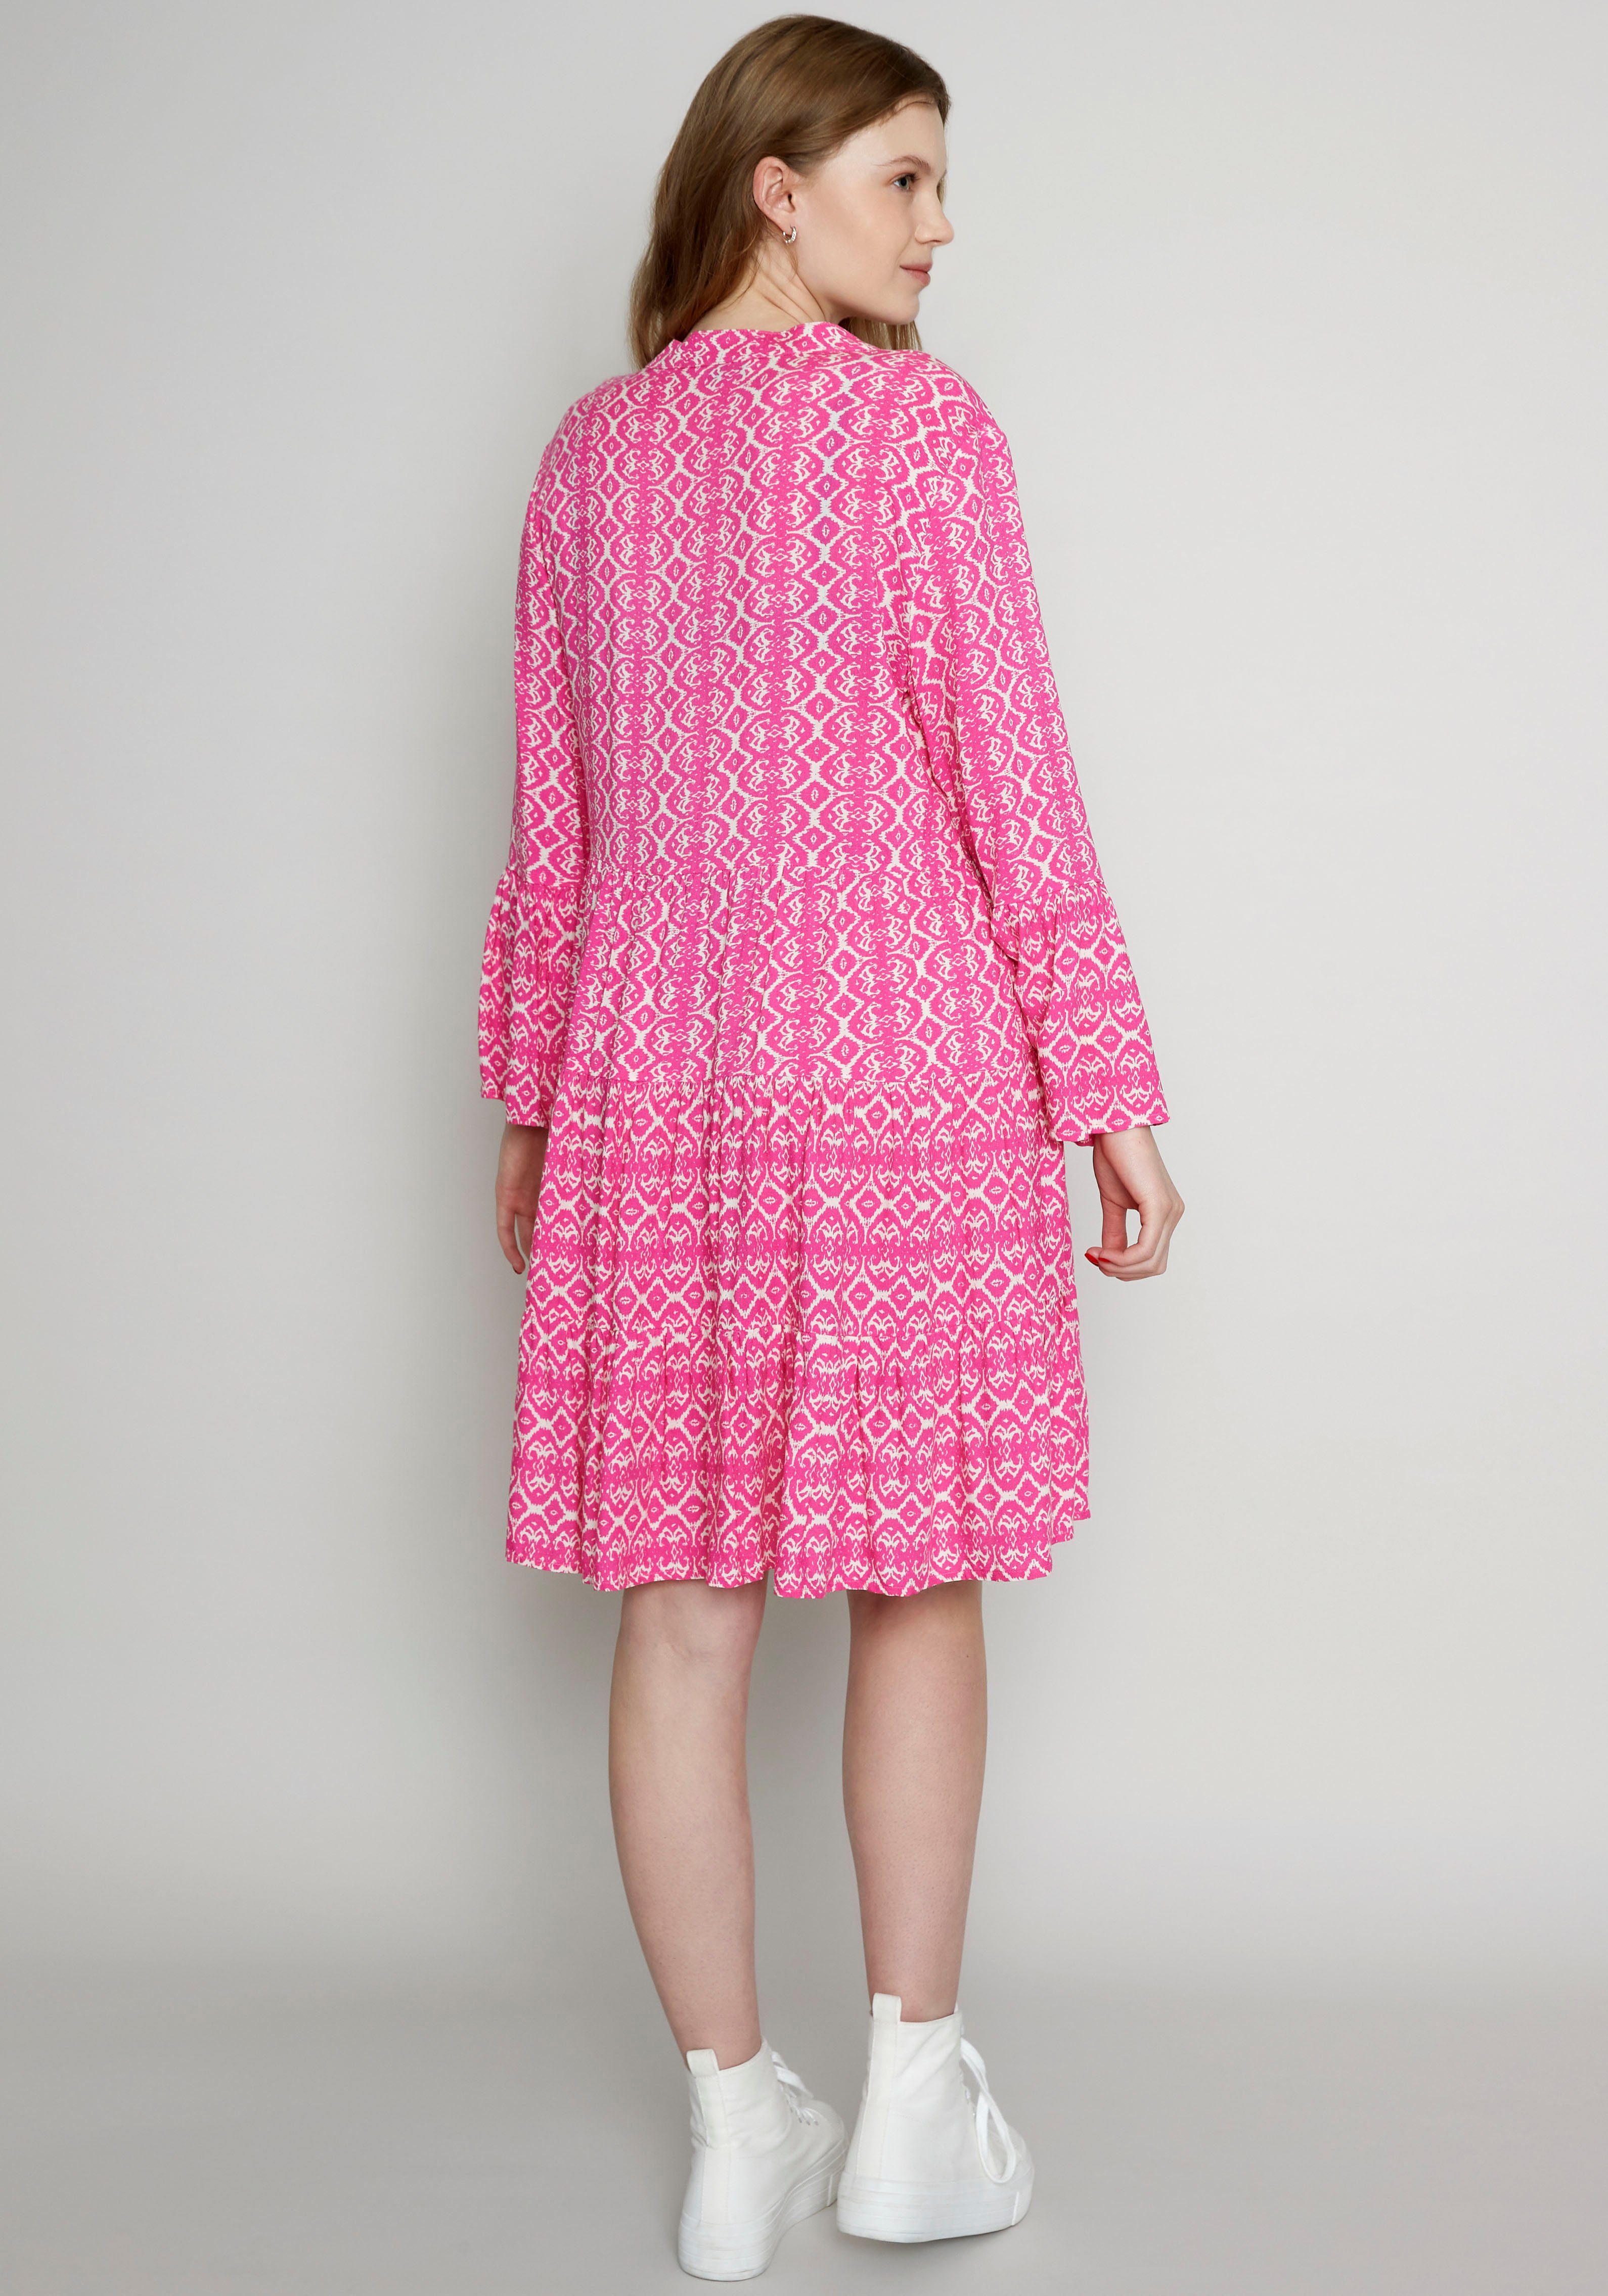 Volant Style Me44lika Sommerkleid Dress Tunika Pink mit im ZABAIONE